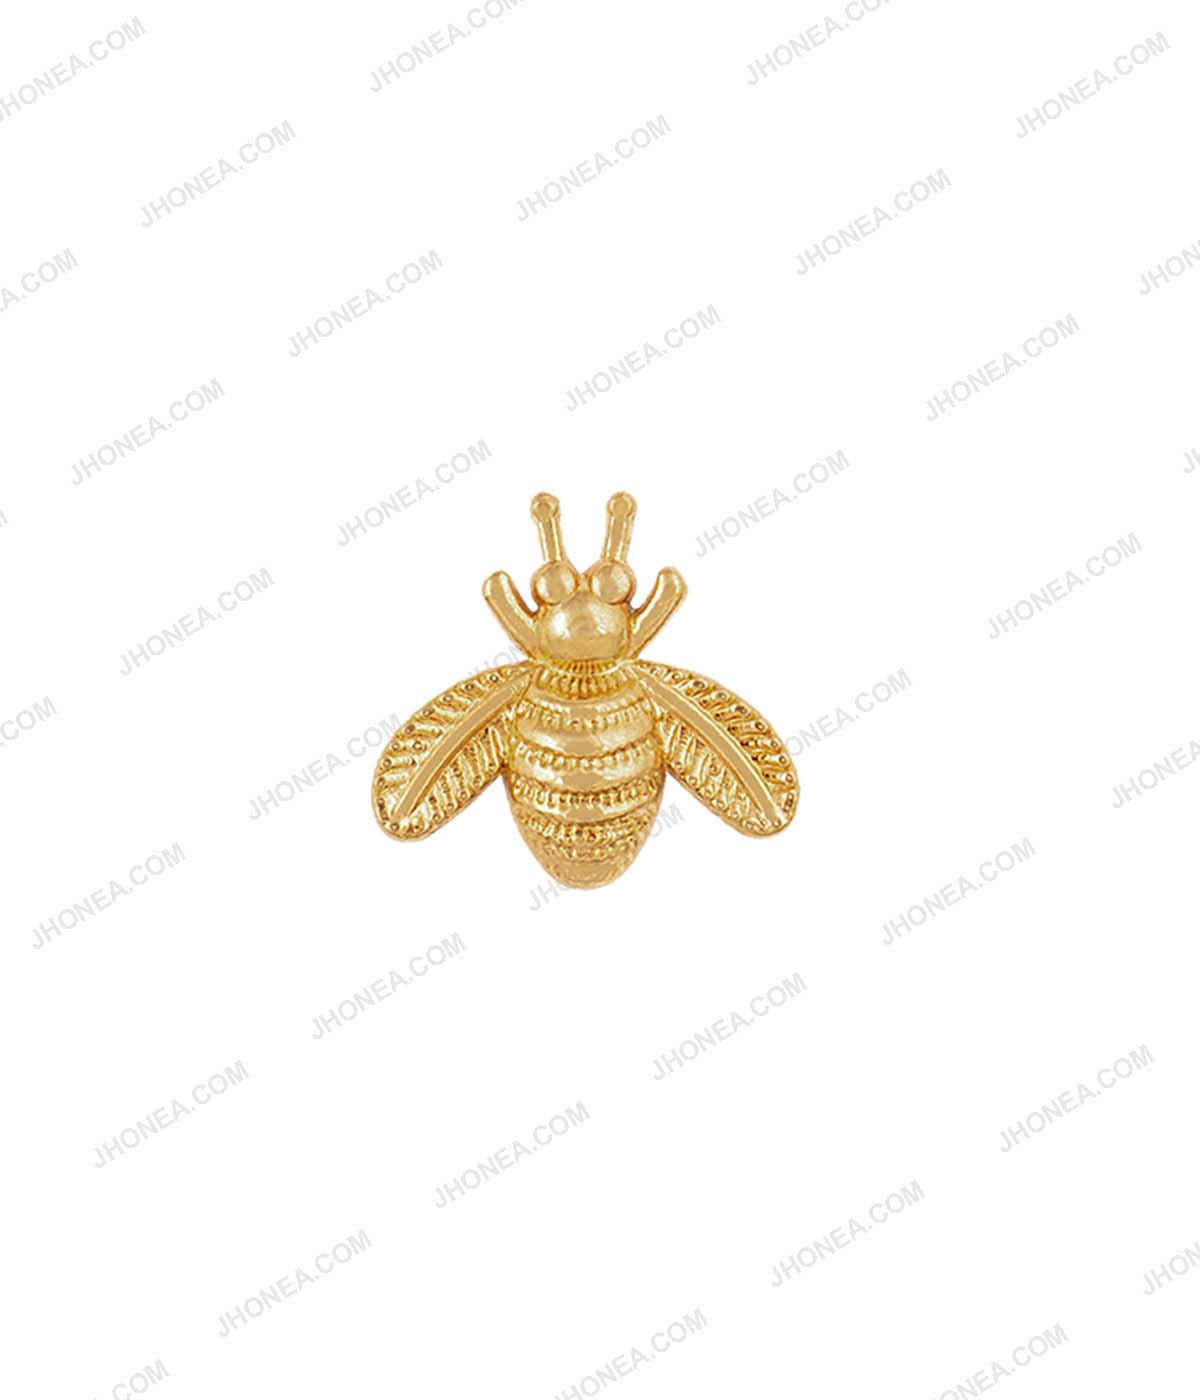 Engraved Honeybee Design Iron On Hot Fix for Suits/Blazers in Golden Color